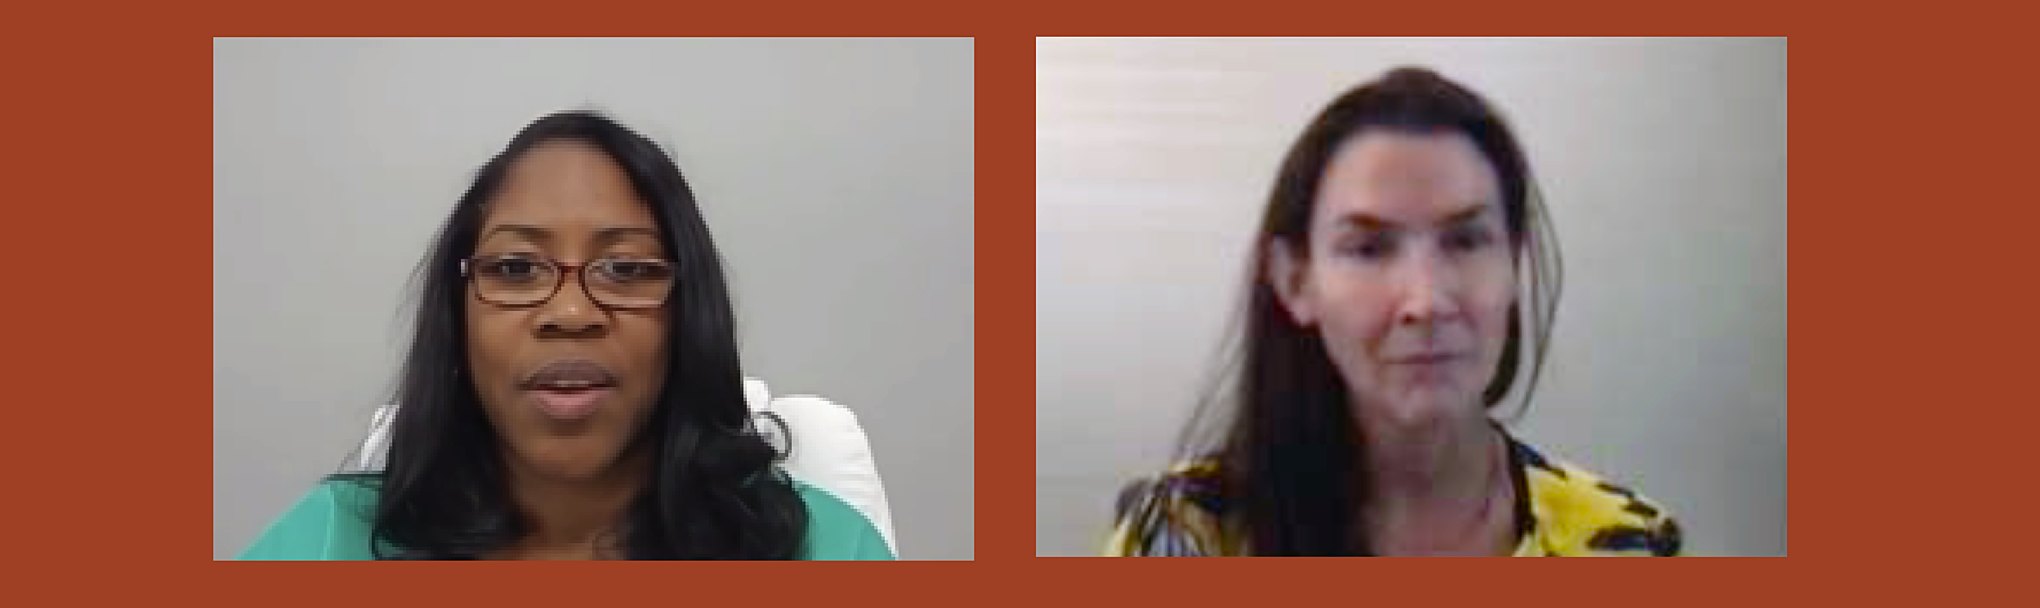 Sarah Grayson and Nyisha Holliday discuss via video conference